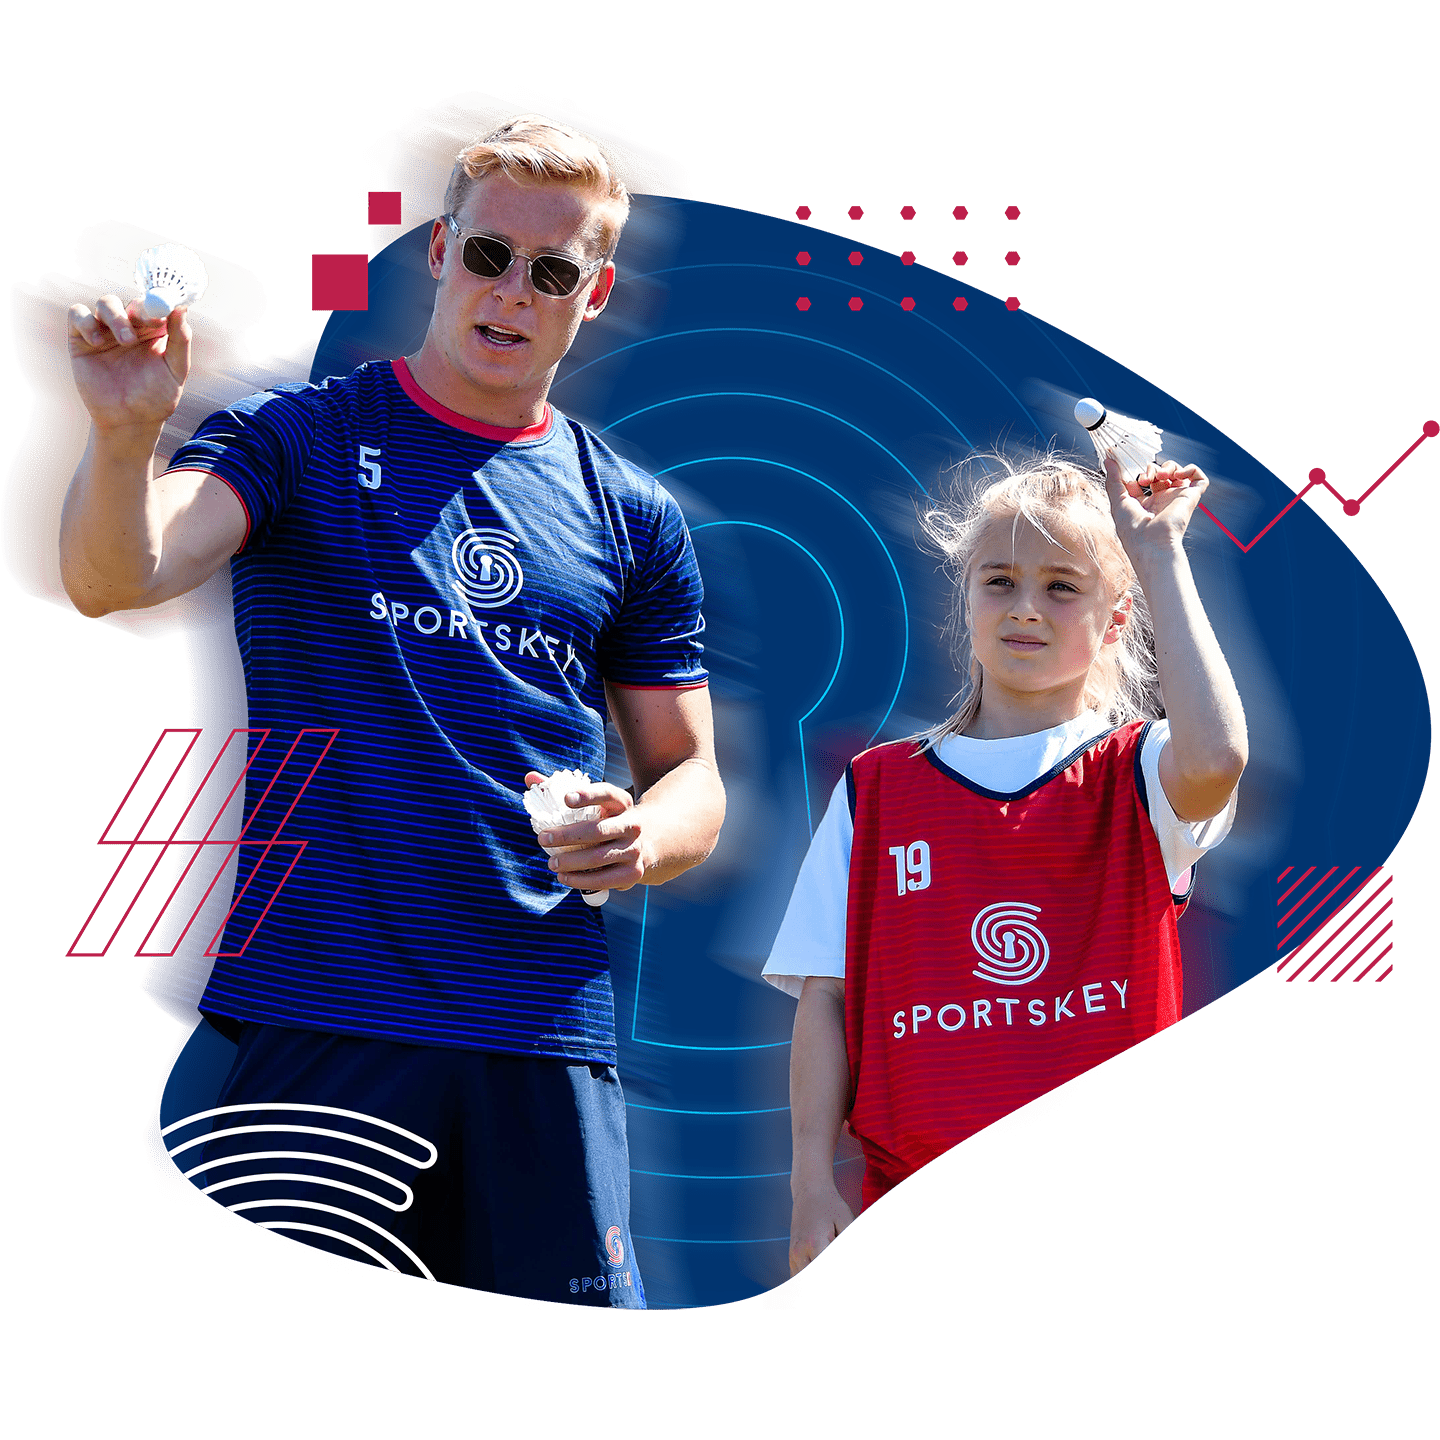 Sportskey coach guiding a young girl athlete